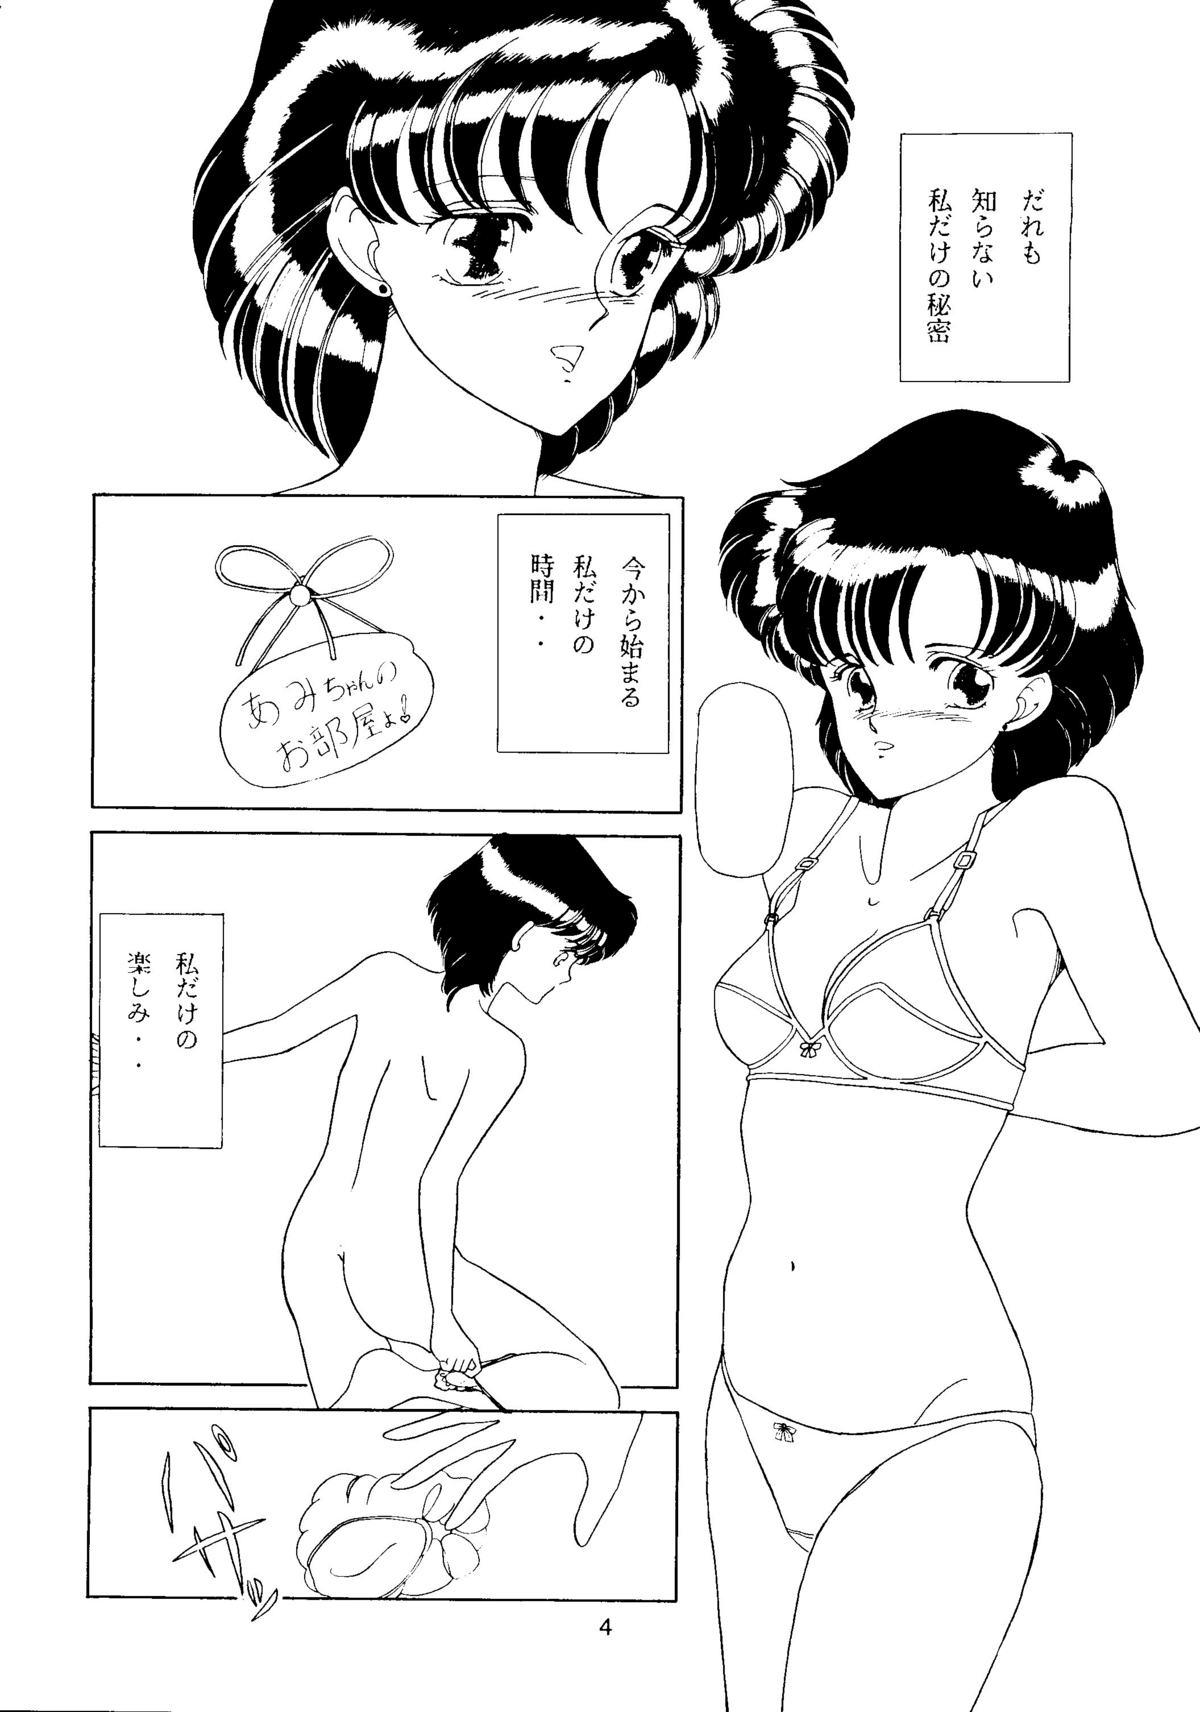 Nasty Moon Girl - Sailor moon Bigbutt - Page 5